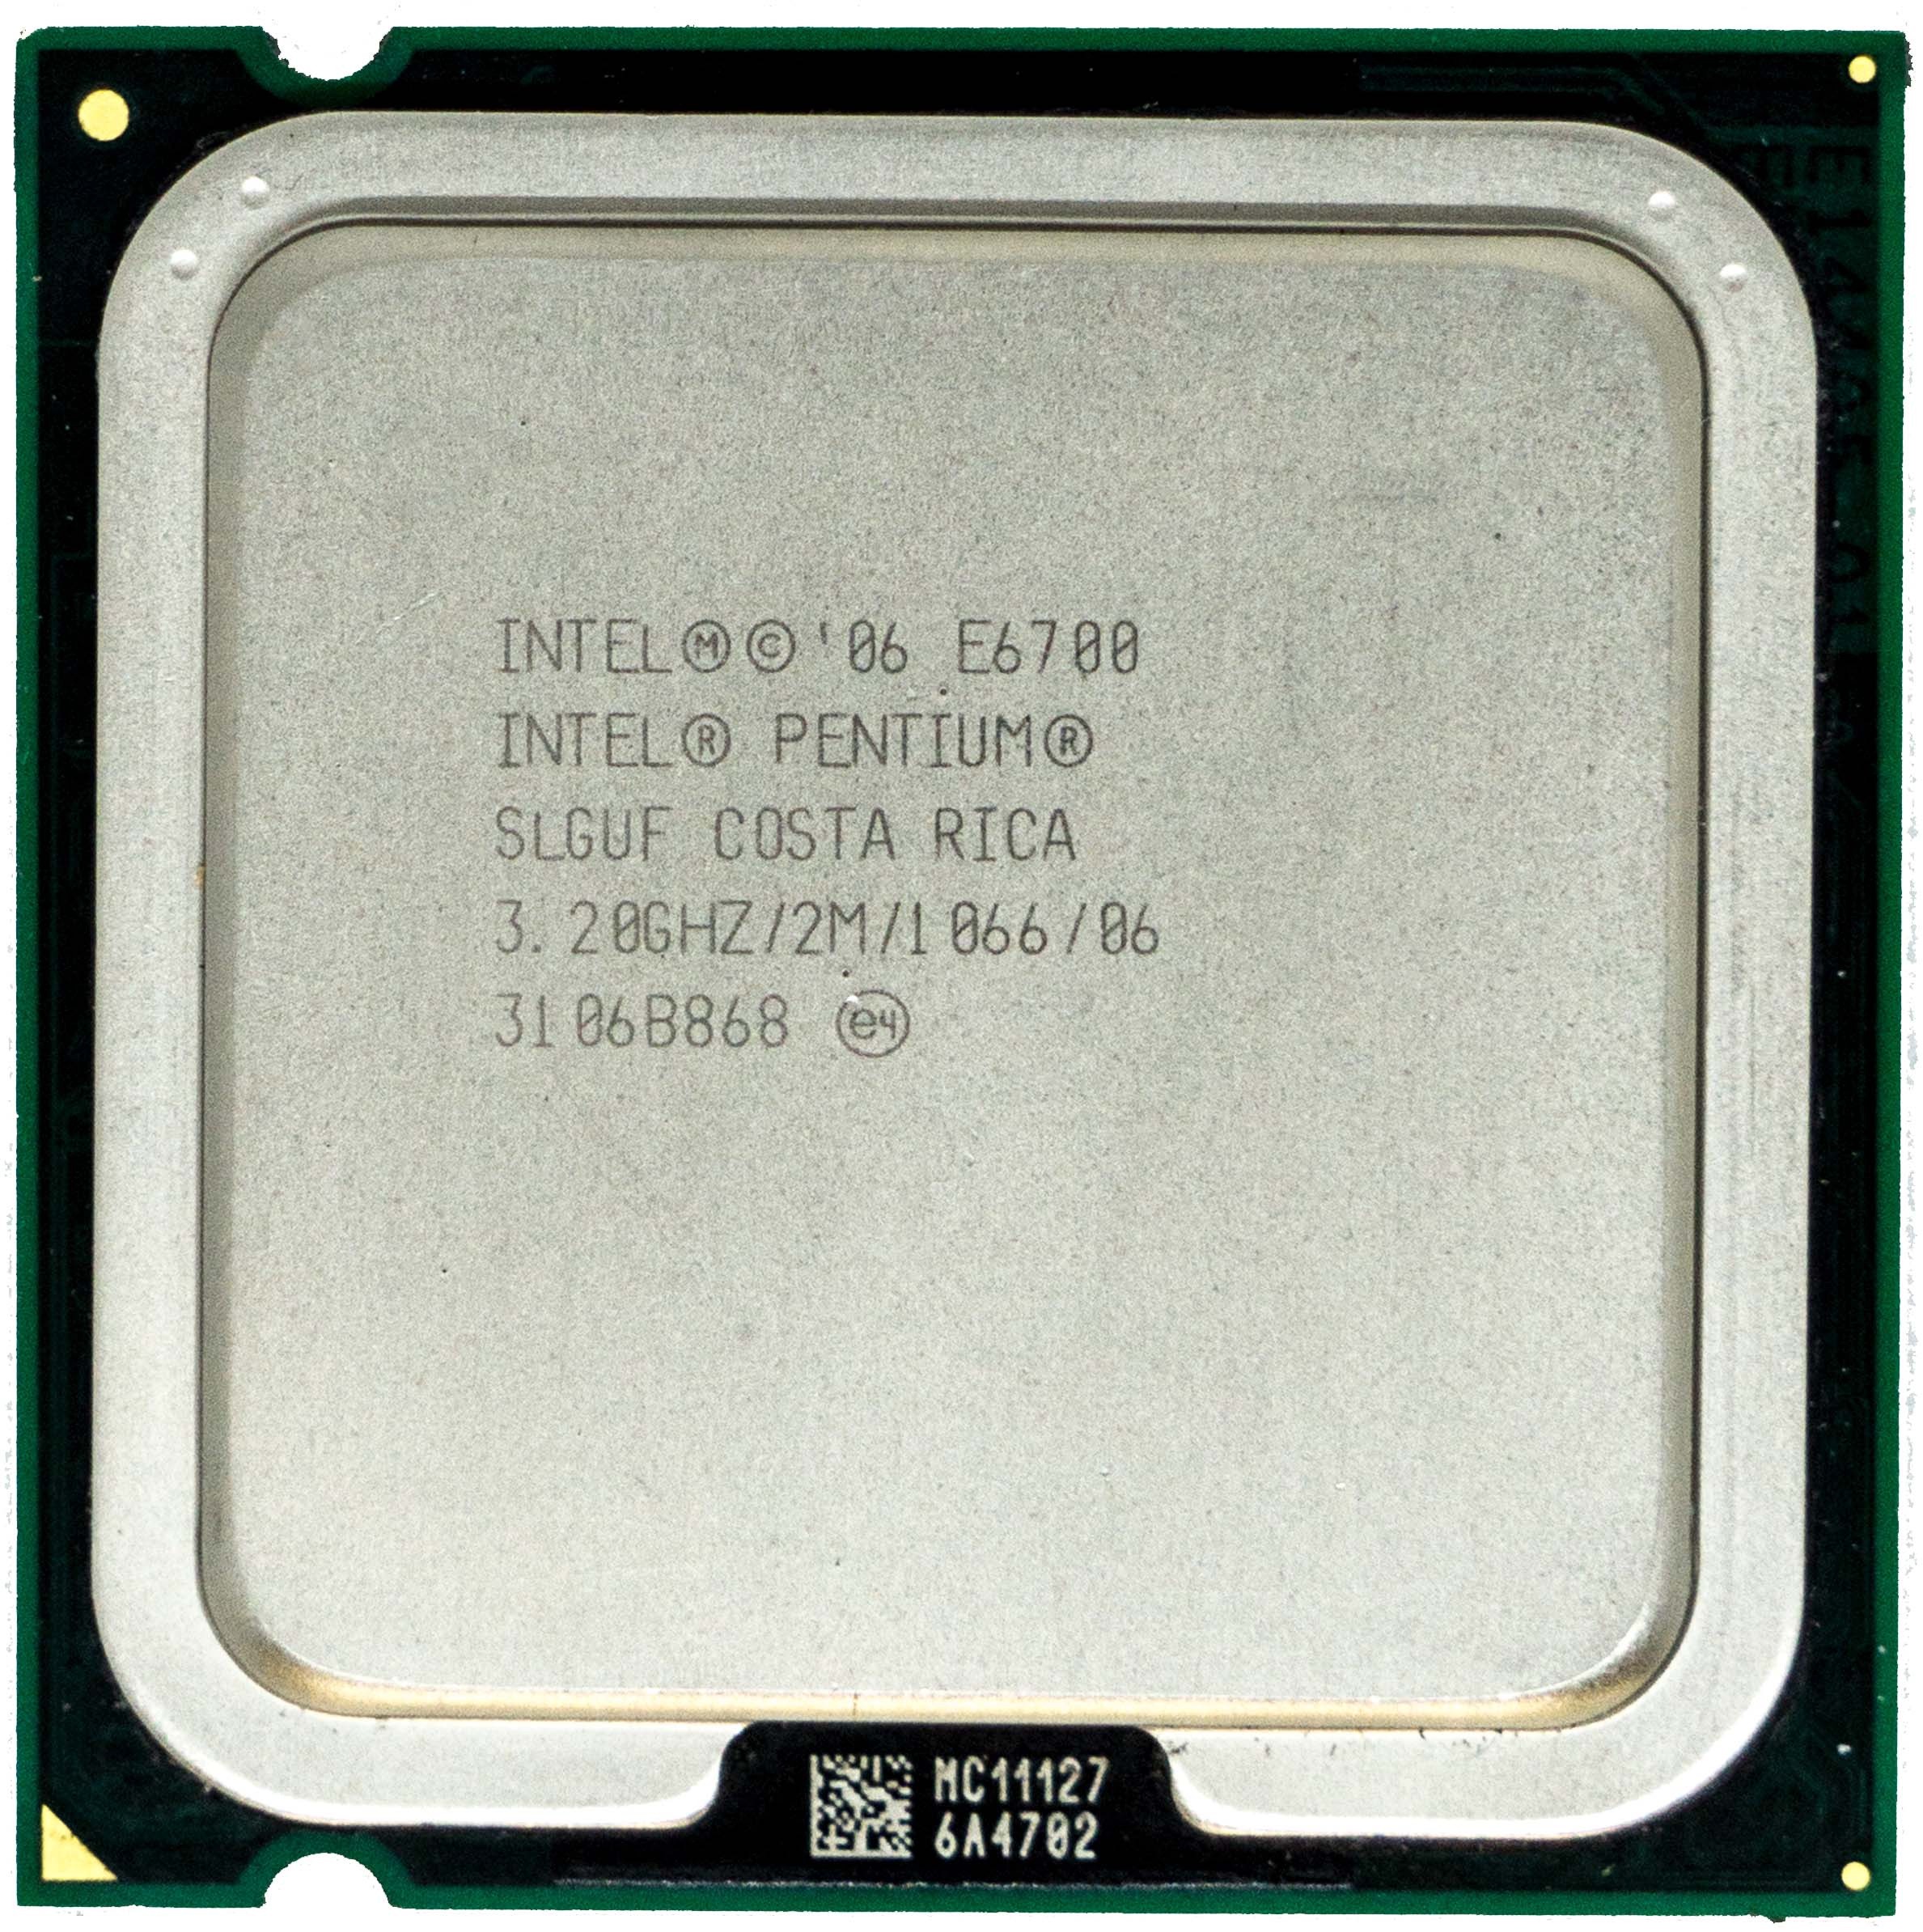 Intel Pentium E6700 (SLGUF) 3.20Ghz Dual (2) Core LGA775 65W CPU